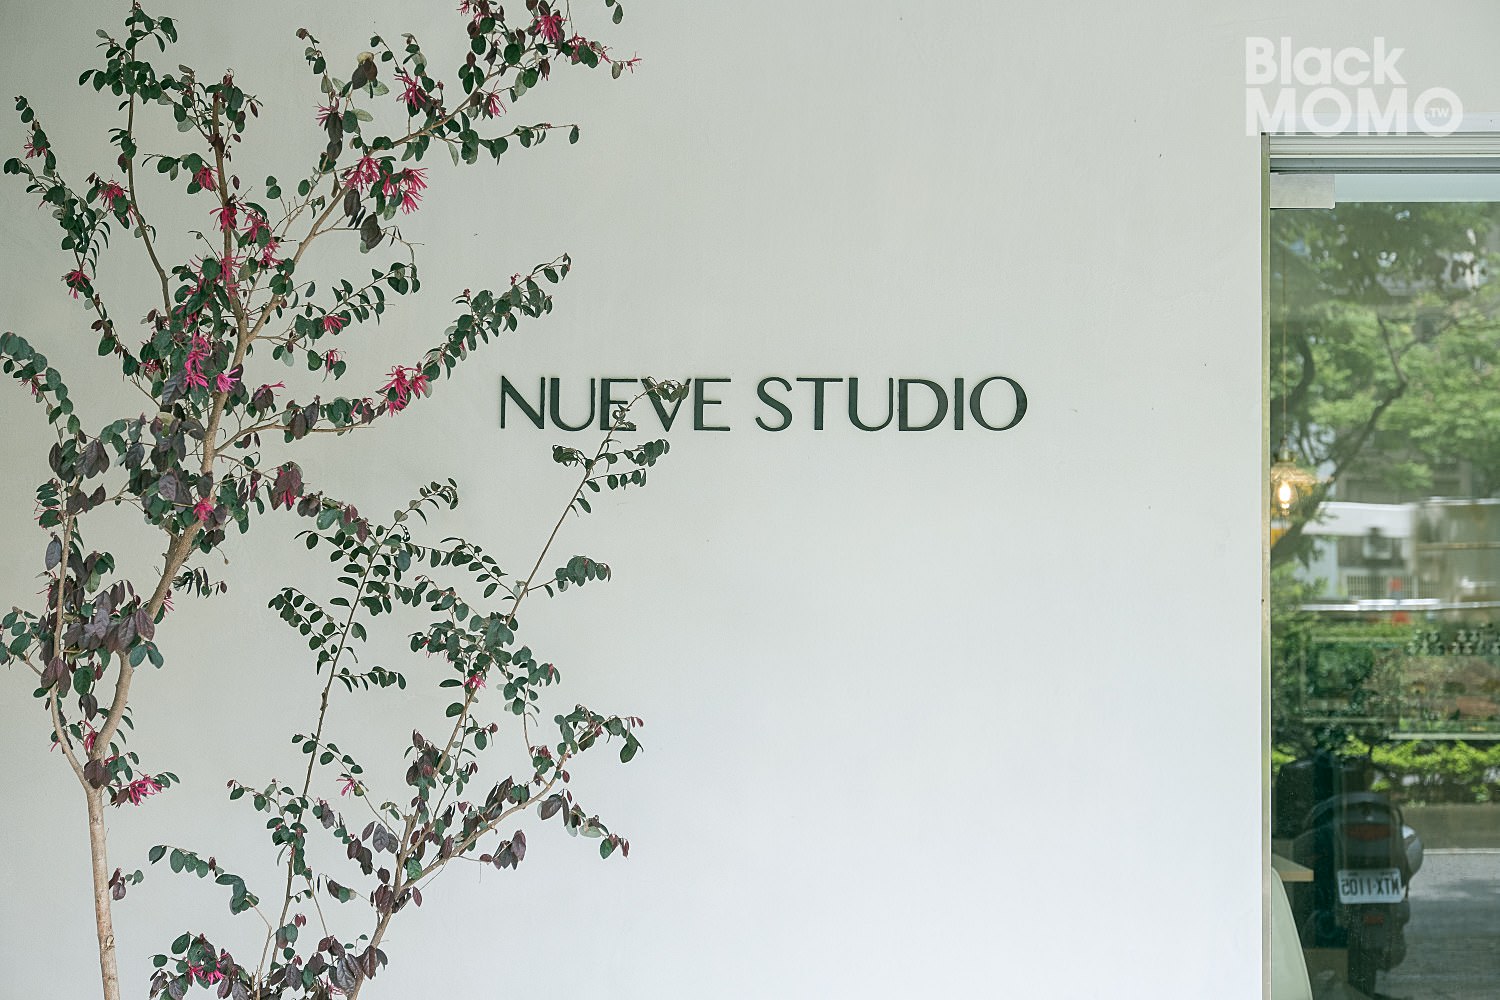 Nueve Studio